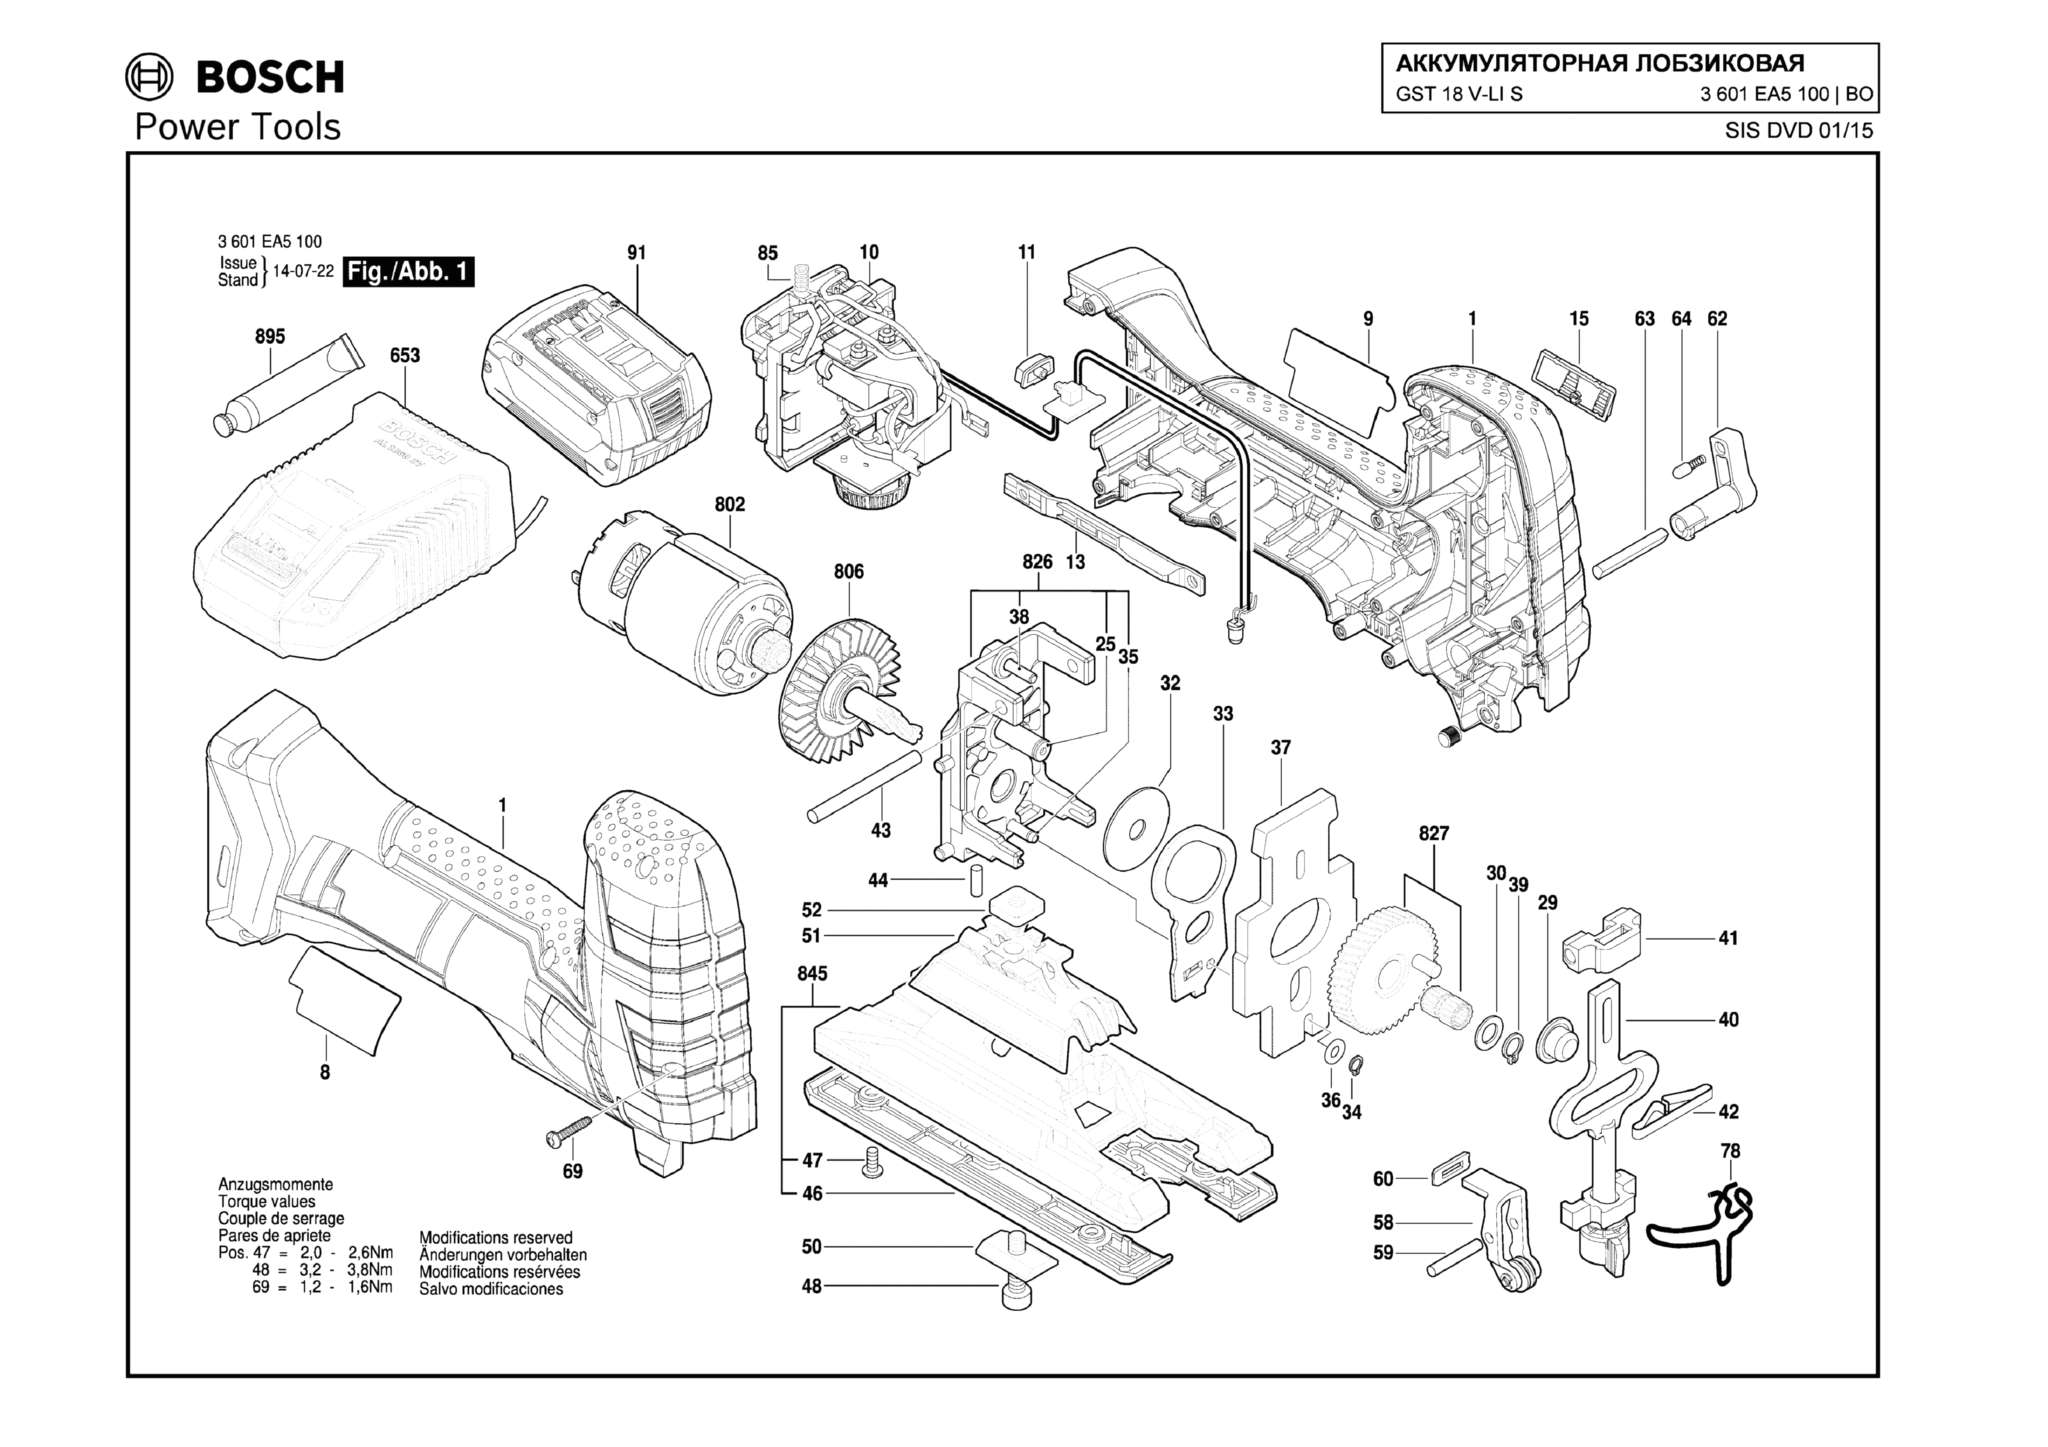 Запчасти, схема и деталировка Bosch GST 18 V-LI S (ТИП 3601EA5100)